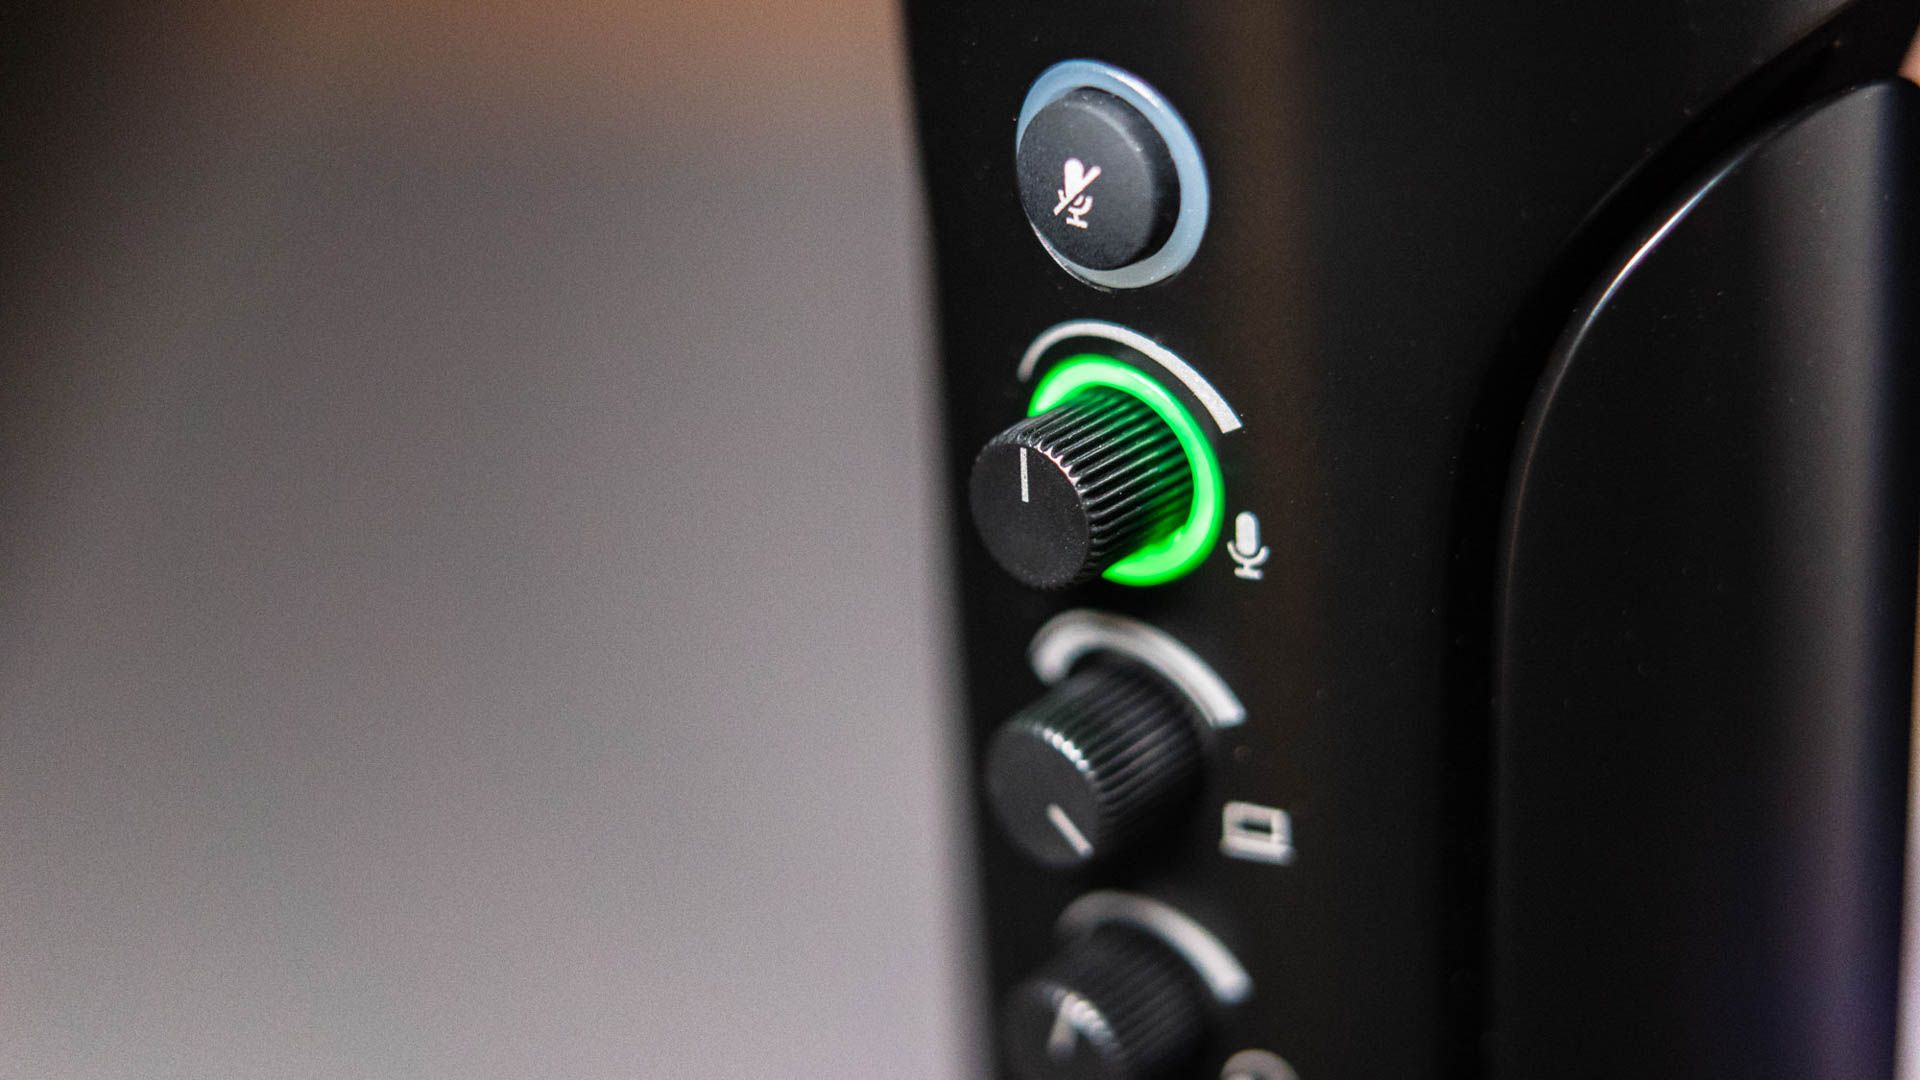 Green led ring around the volume dial on the Sennheiser Profile USB Mic